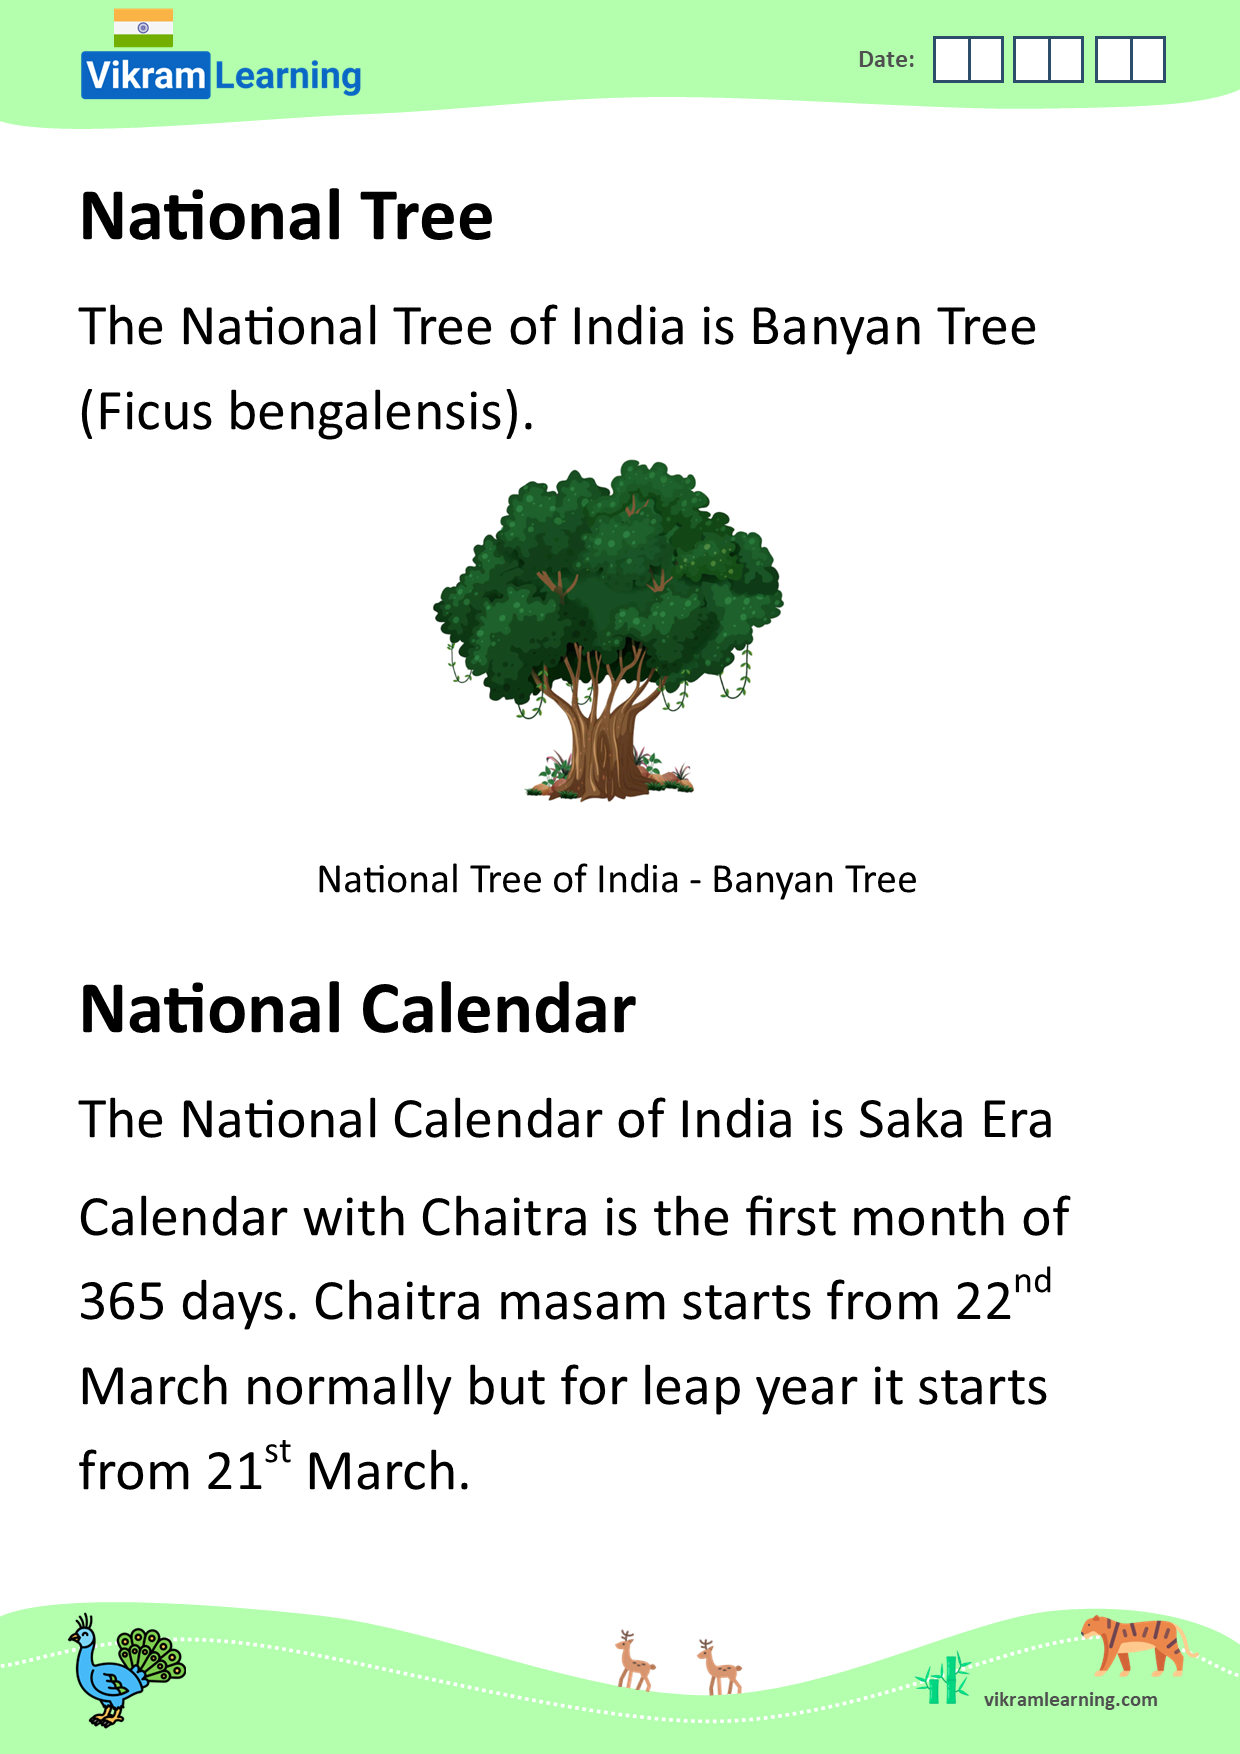 Download india national symbols worksheets